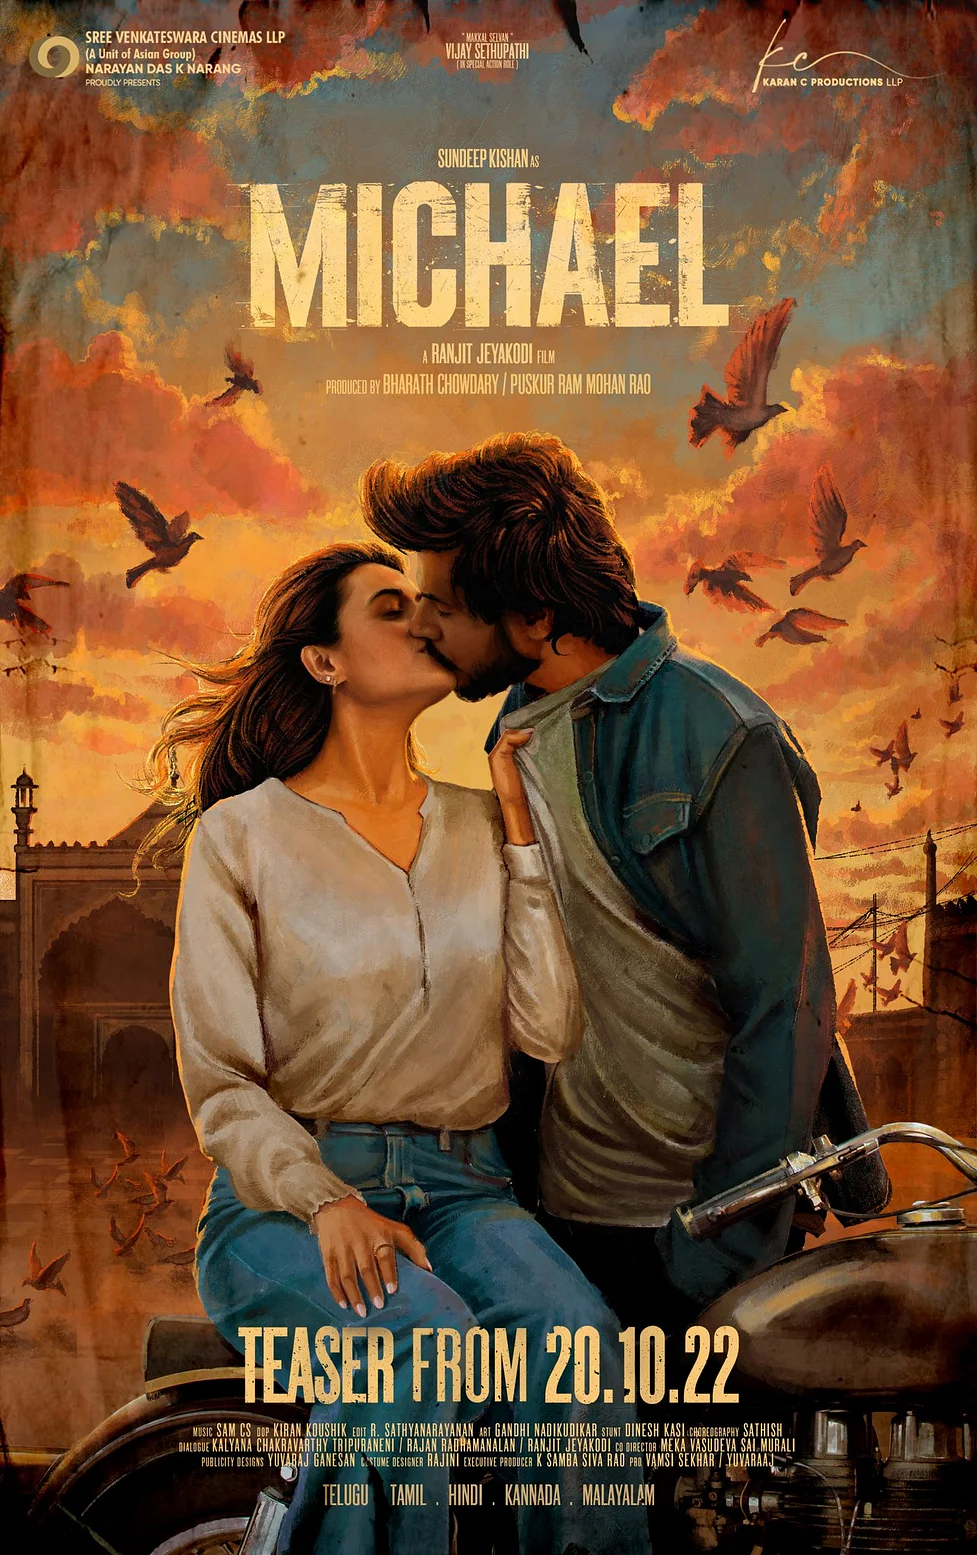 Sundeep Kishan and Vijay Sethupathi's 'Michael' to release on This date